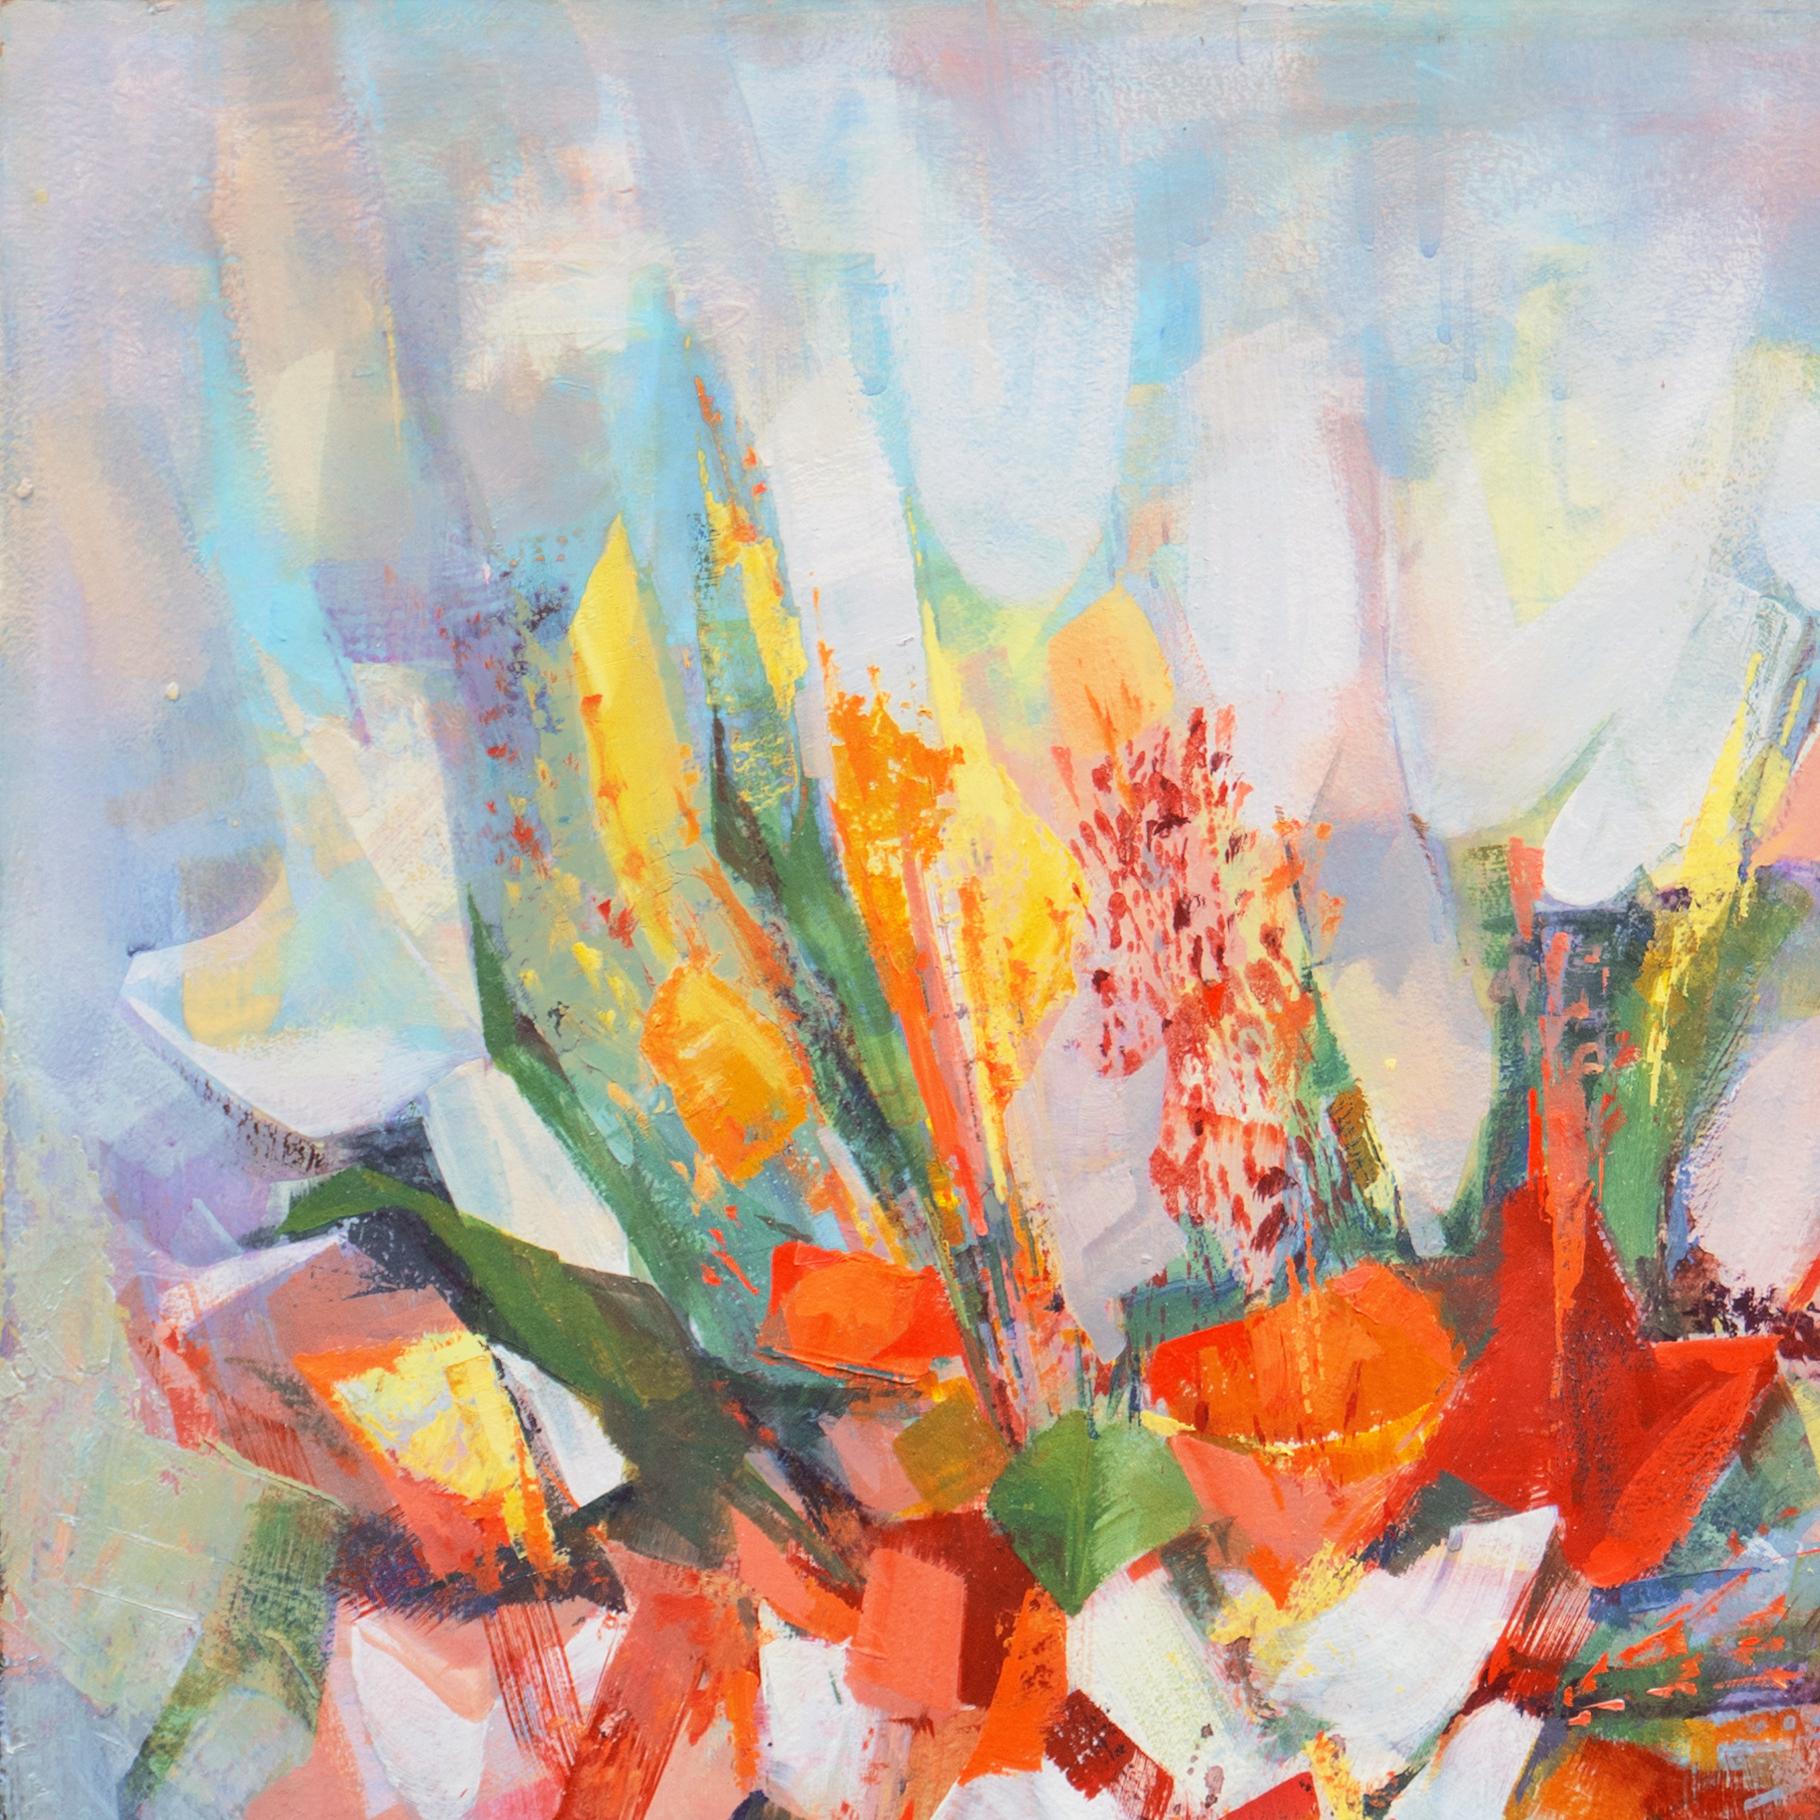 'Tulips and Calla Lilies', Mendocino, Californie, grande nature morte à l'huile moderniste - Impressionnisme Painting par David Barnes